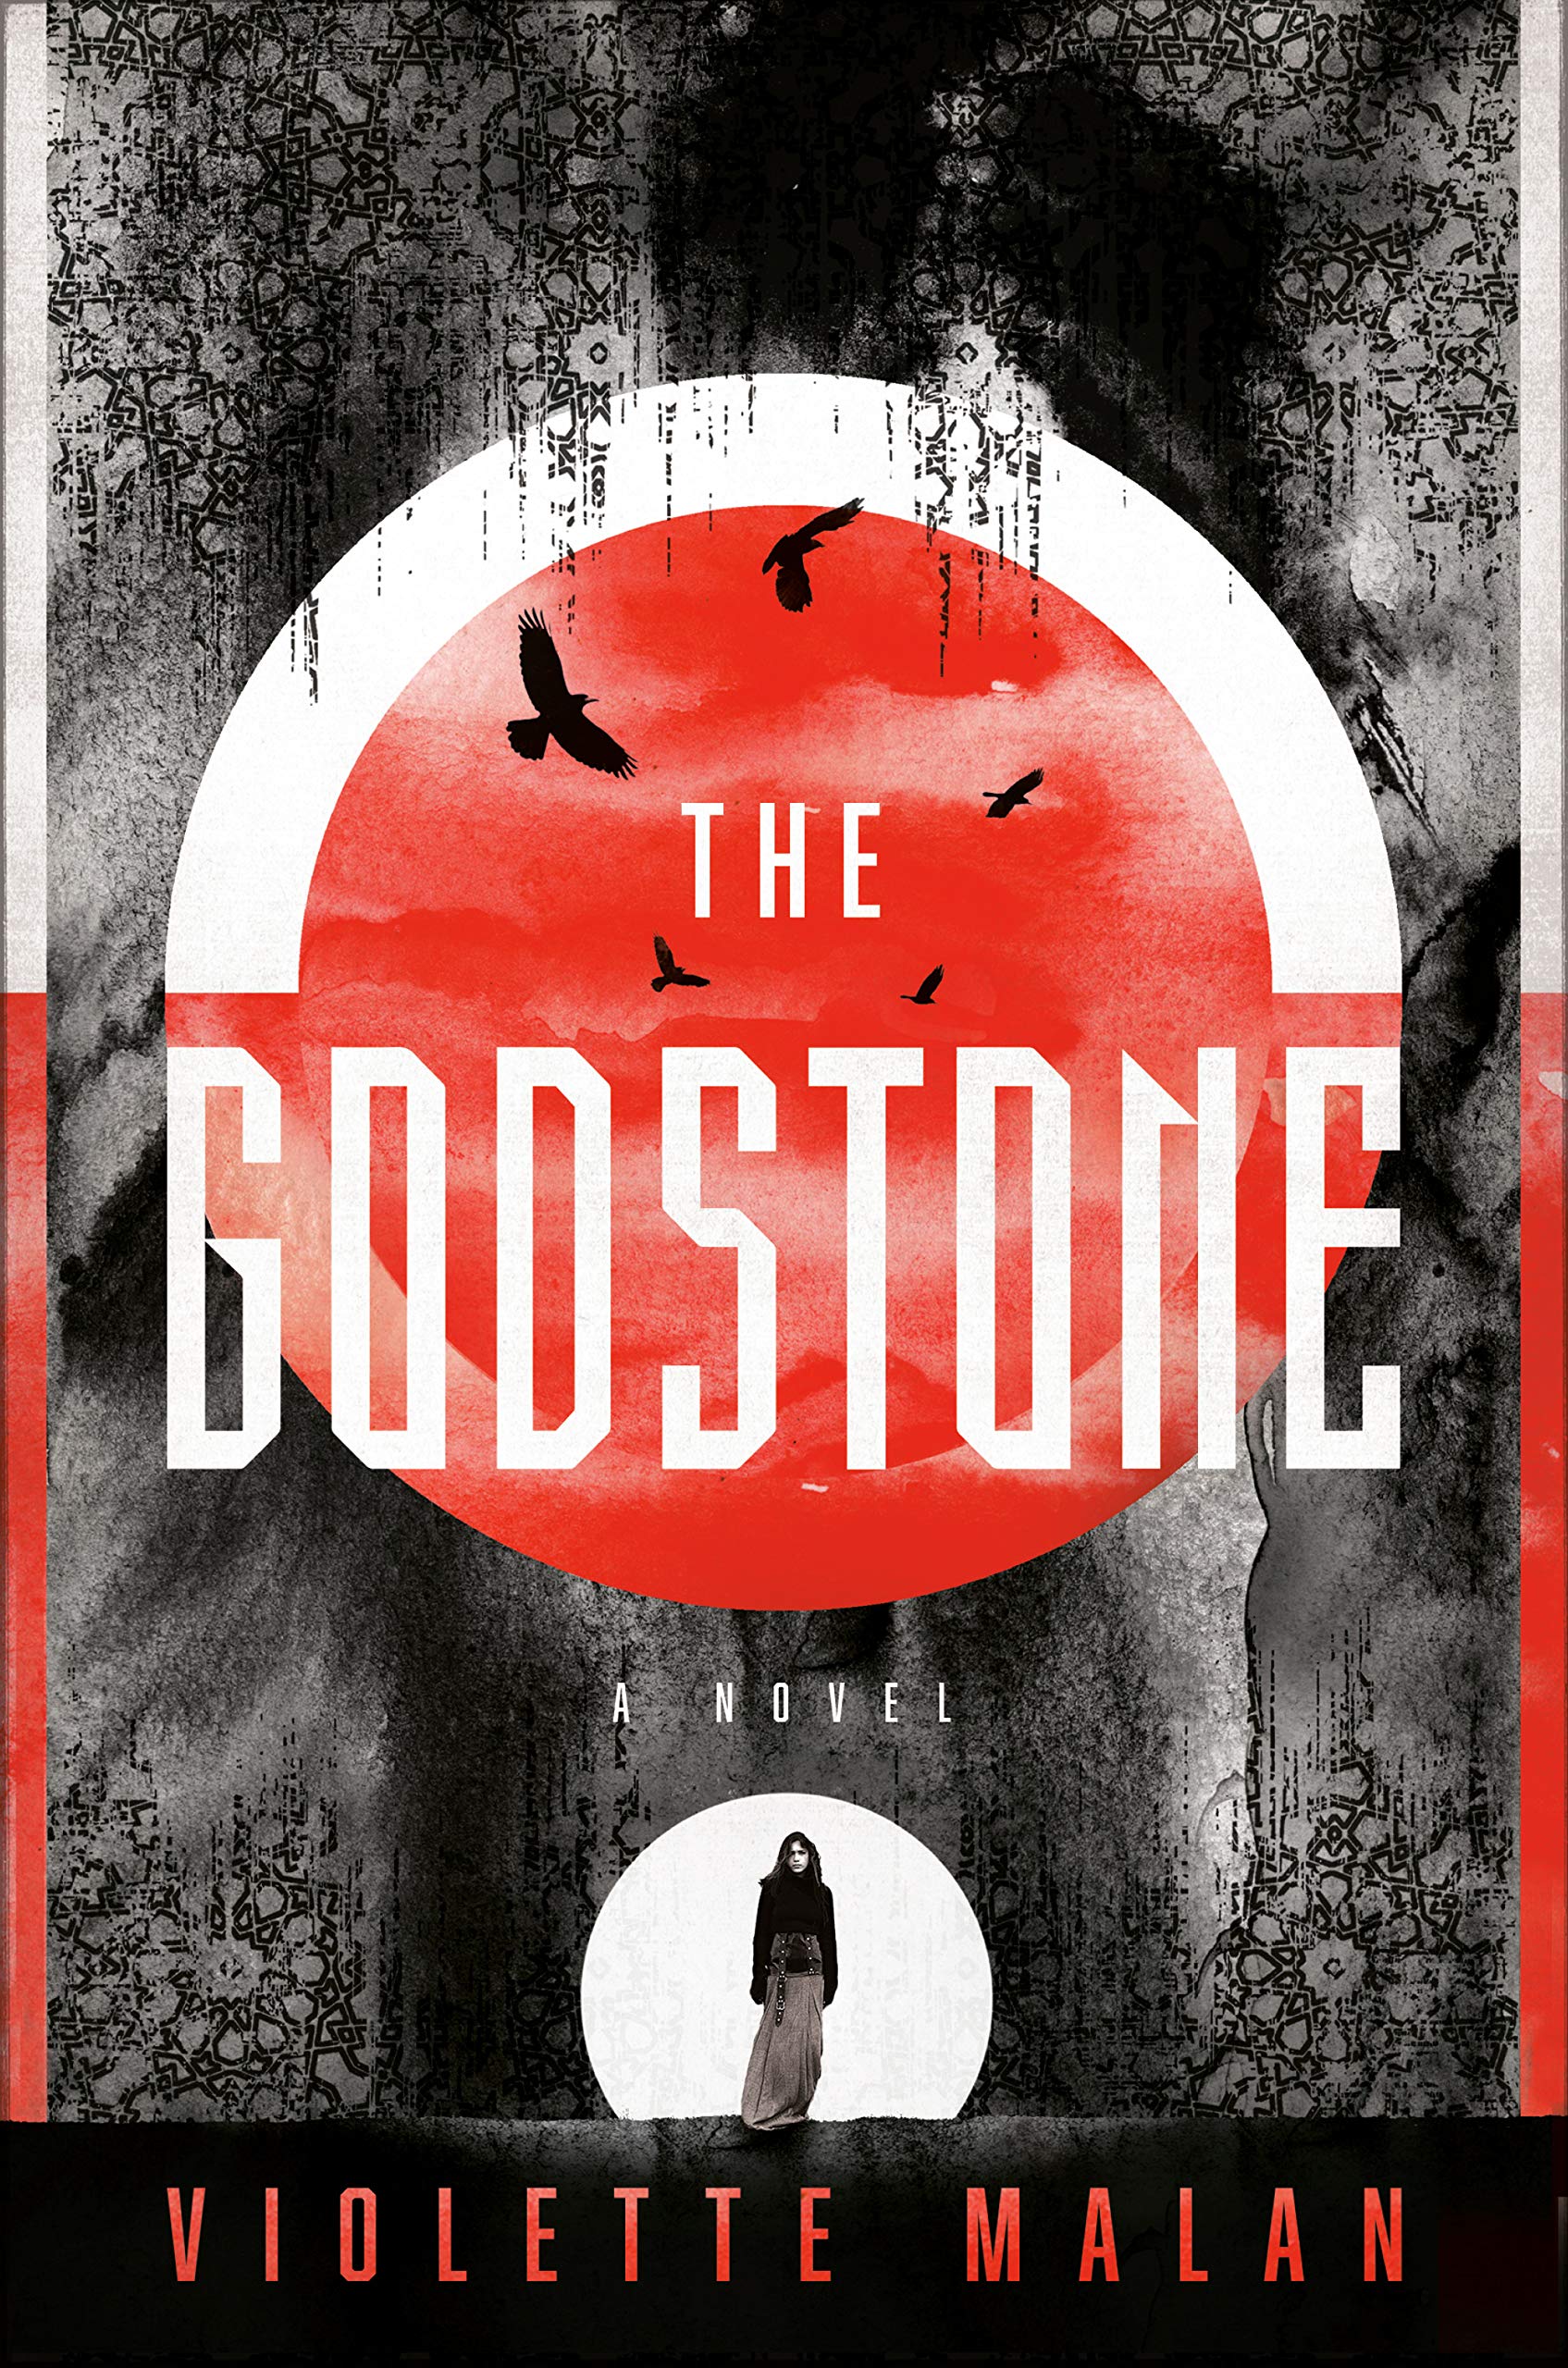 Image for "The Godstone"